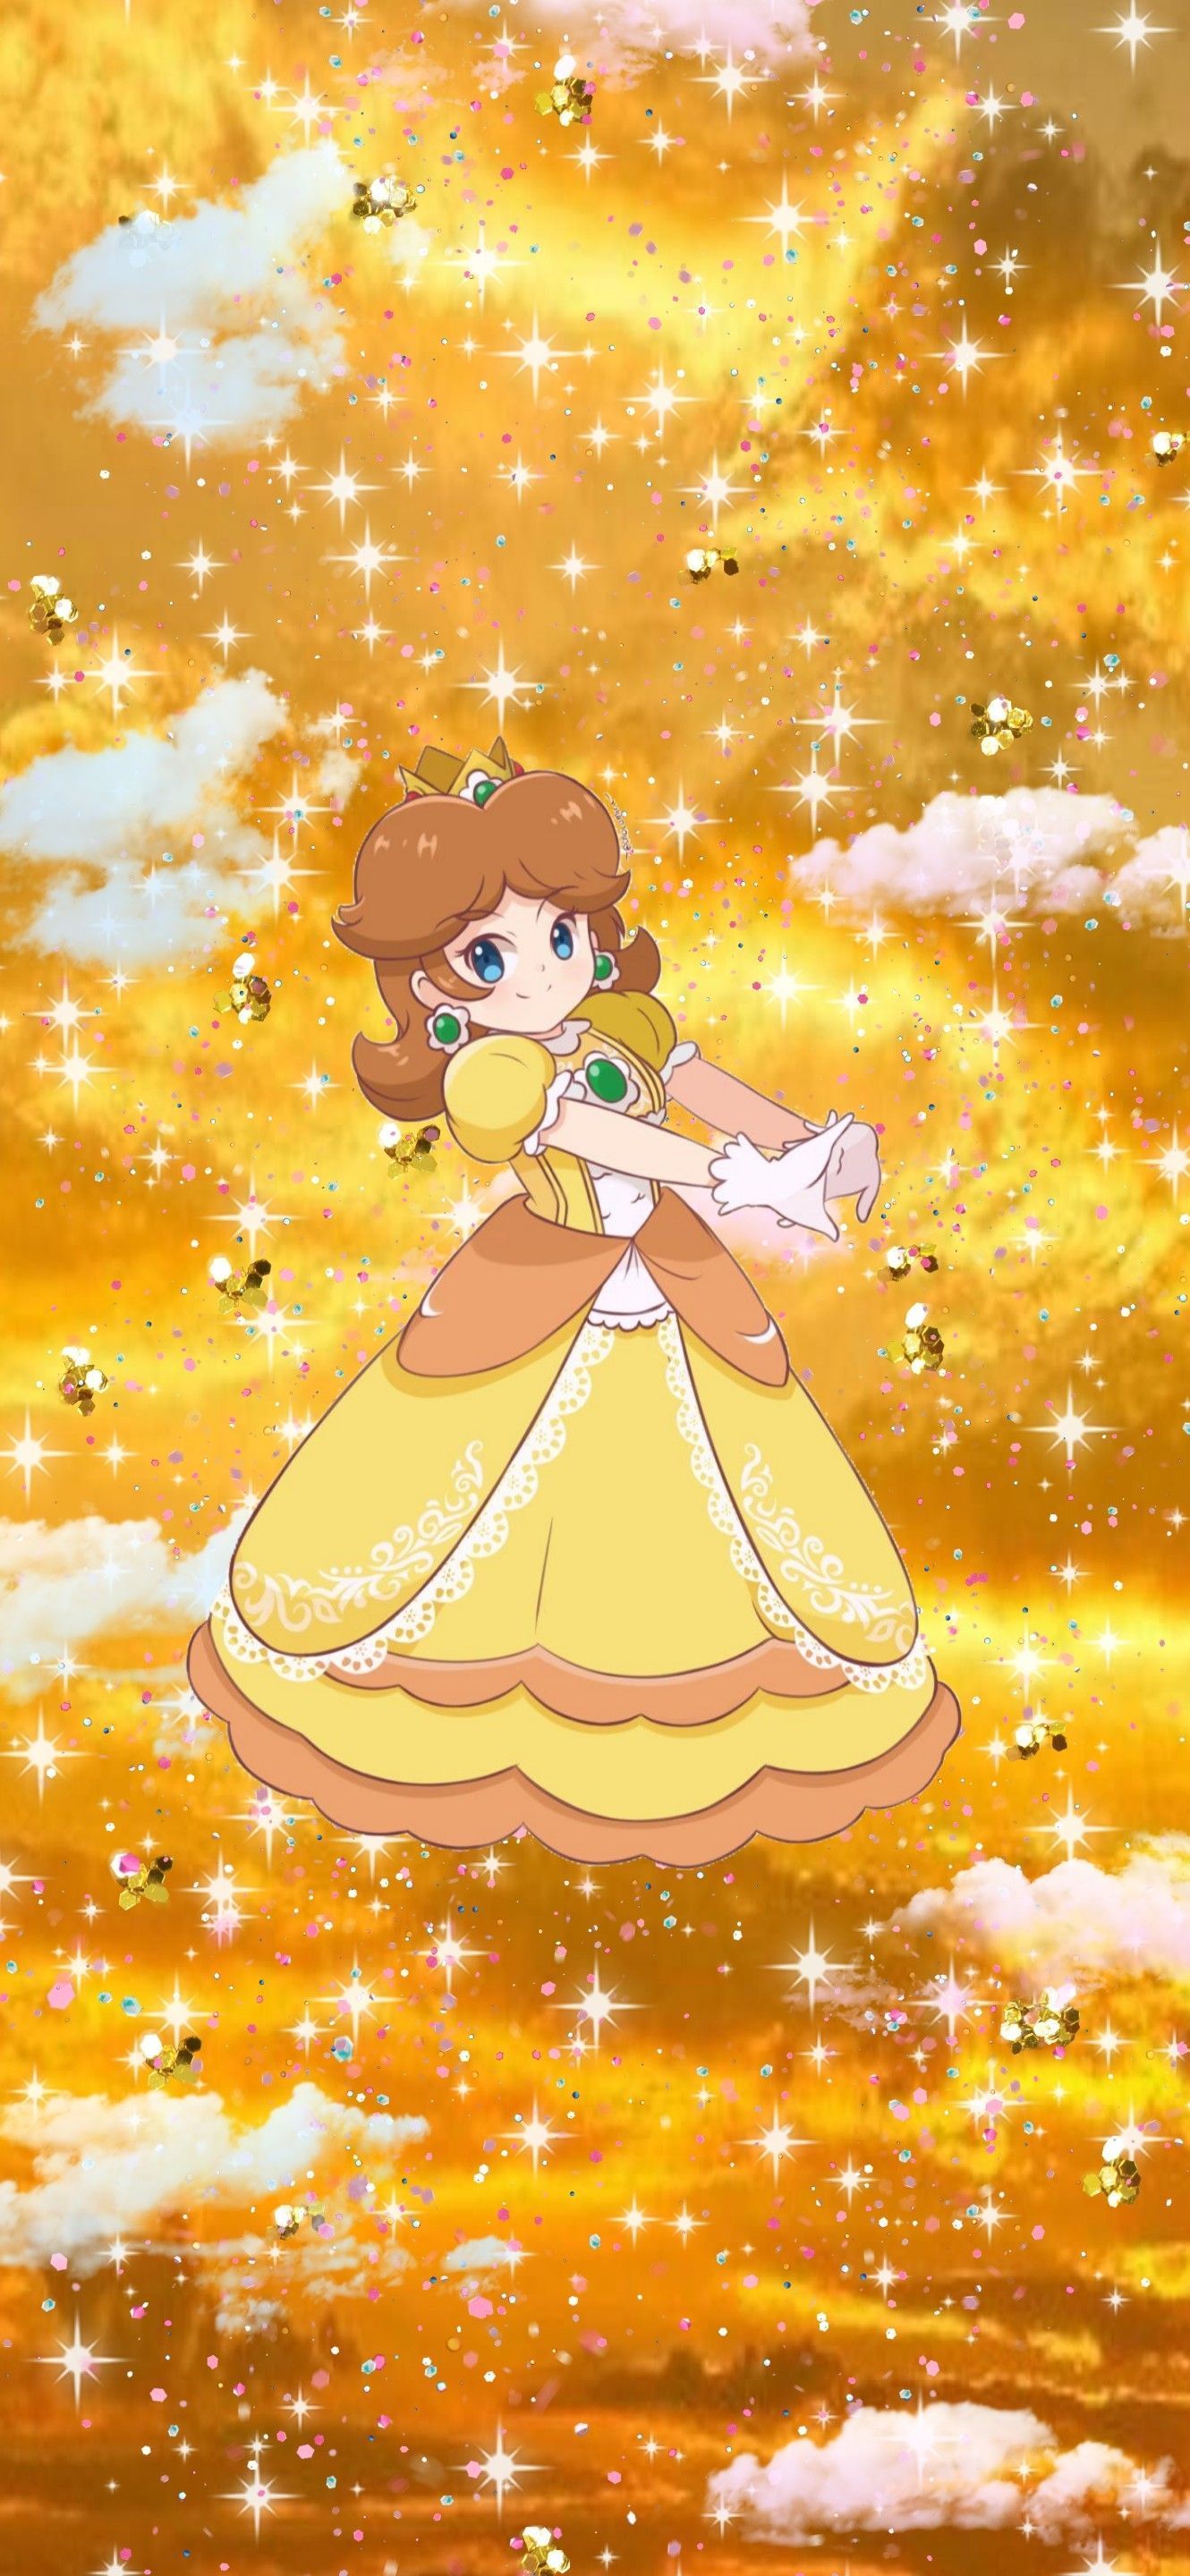 Nintendo Princess Daisy yellow aesthetic Phone Wallpaper. Daisy wallpaper, Princess daisy, Cute wallpaper